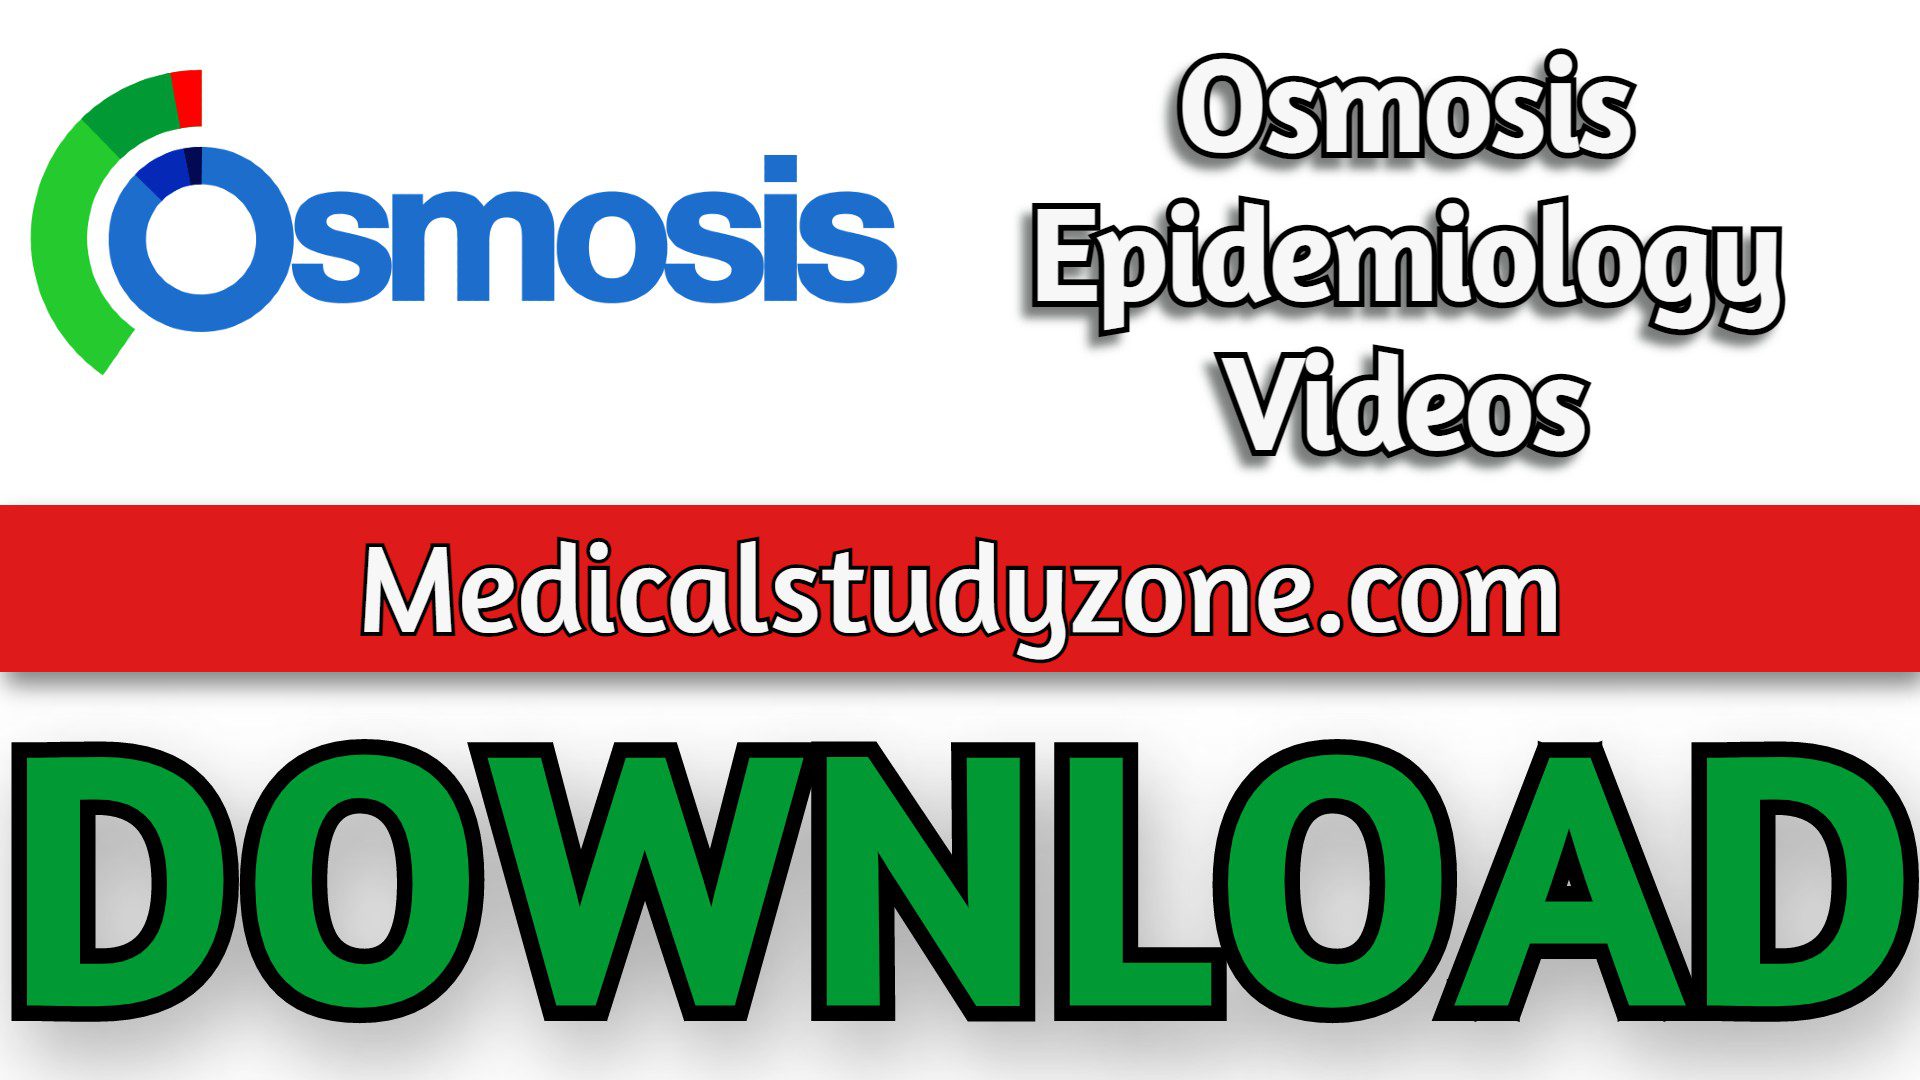 Osmosis Epidemiology Videos 2022 Free Download